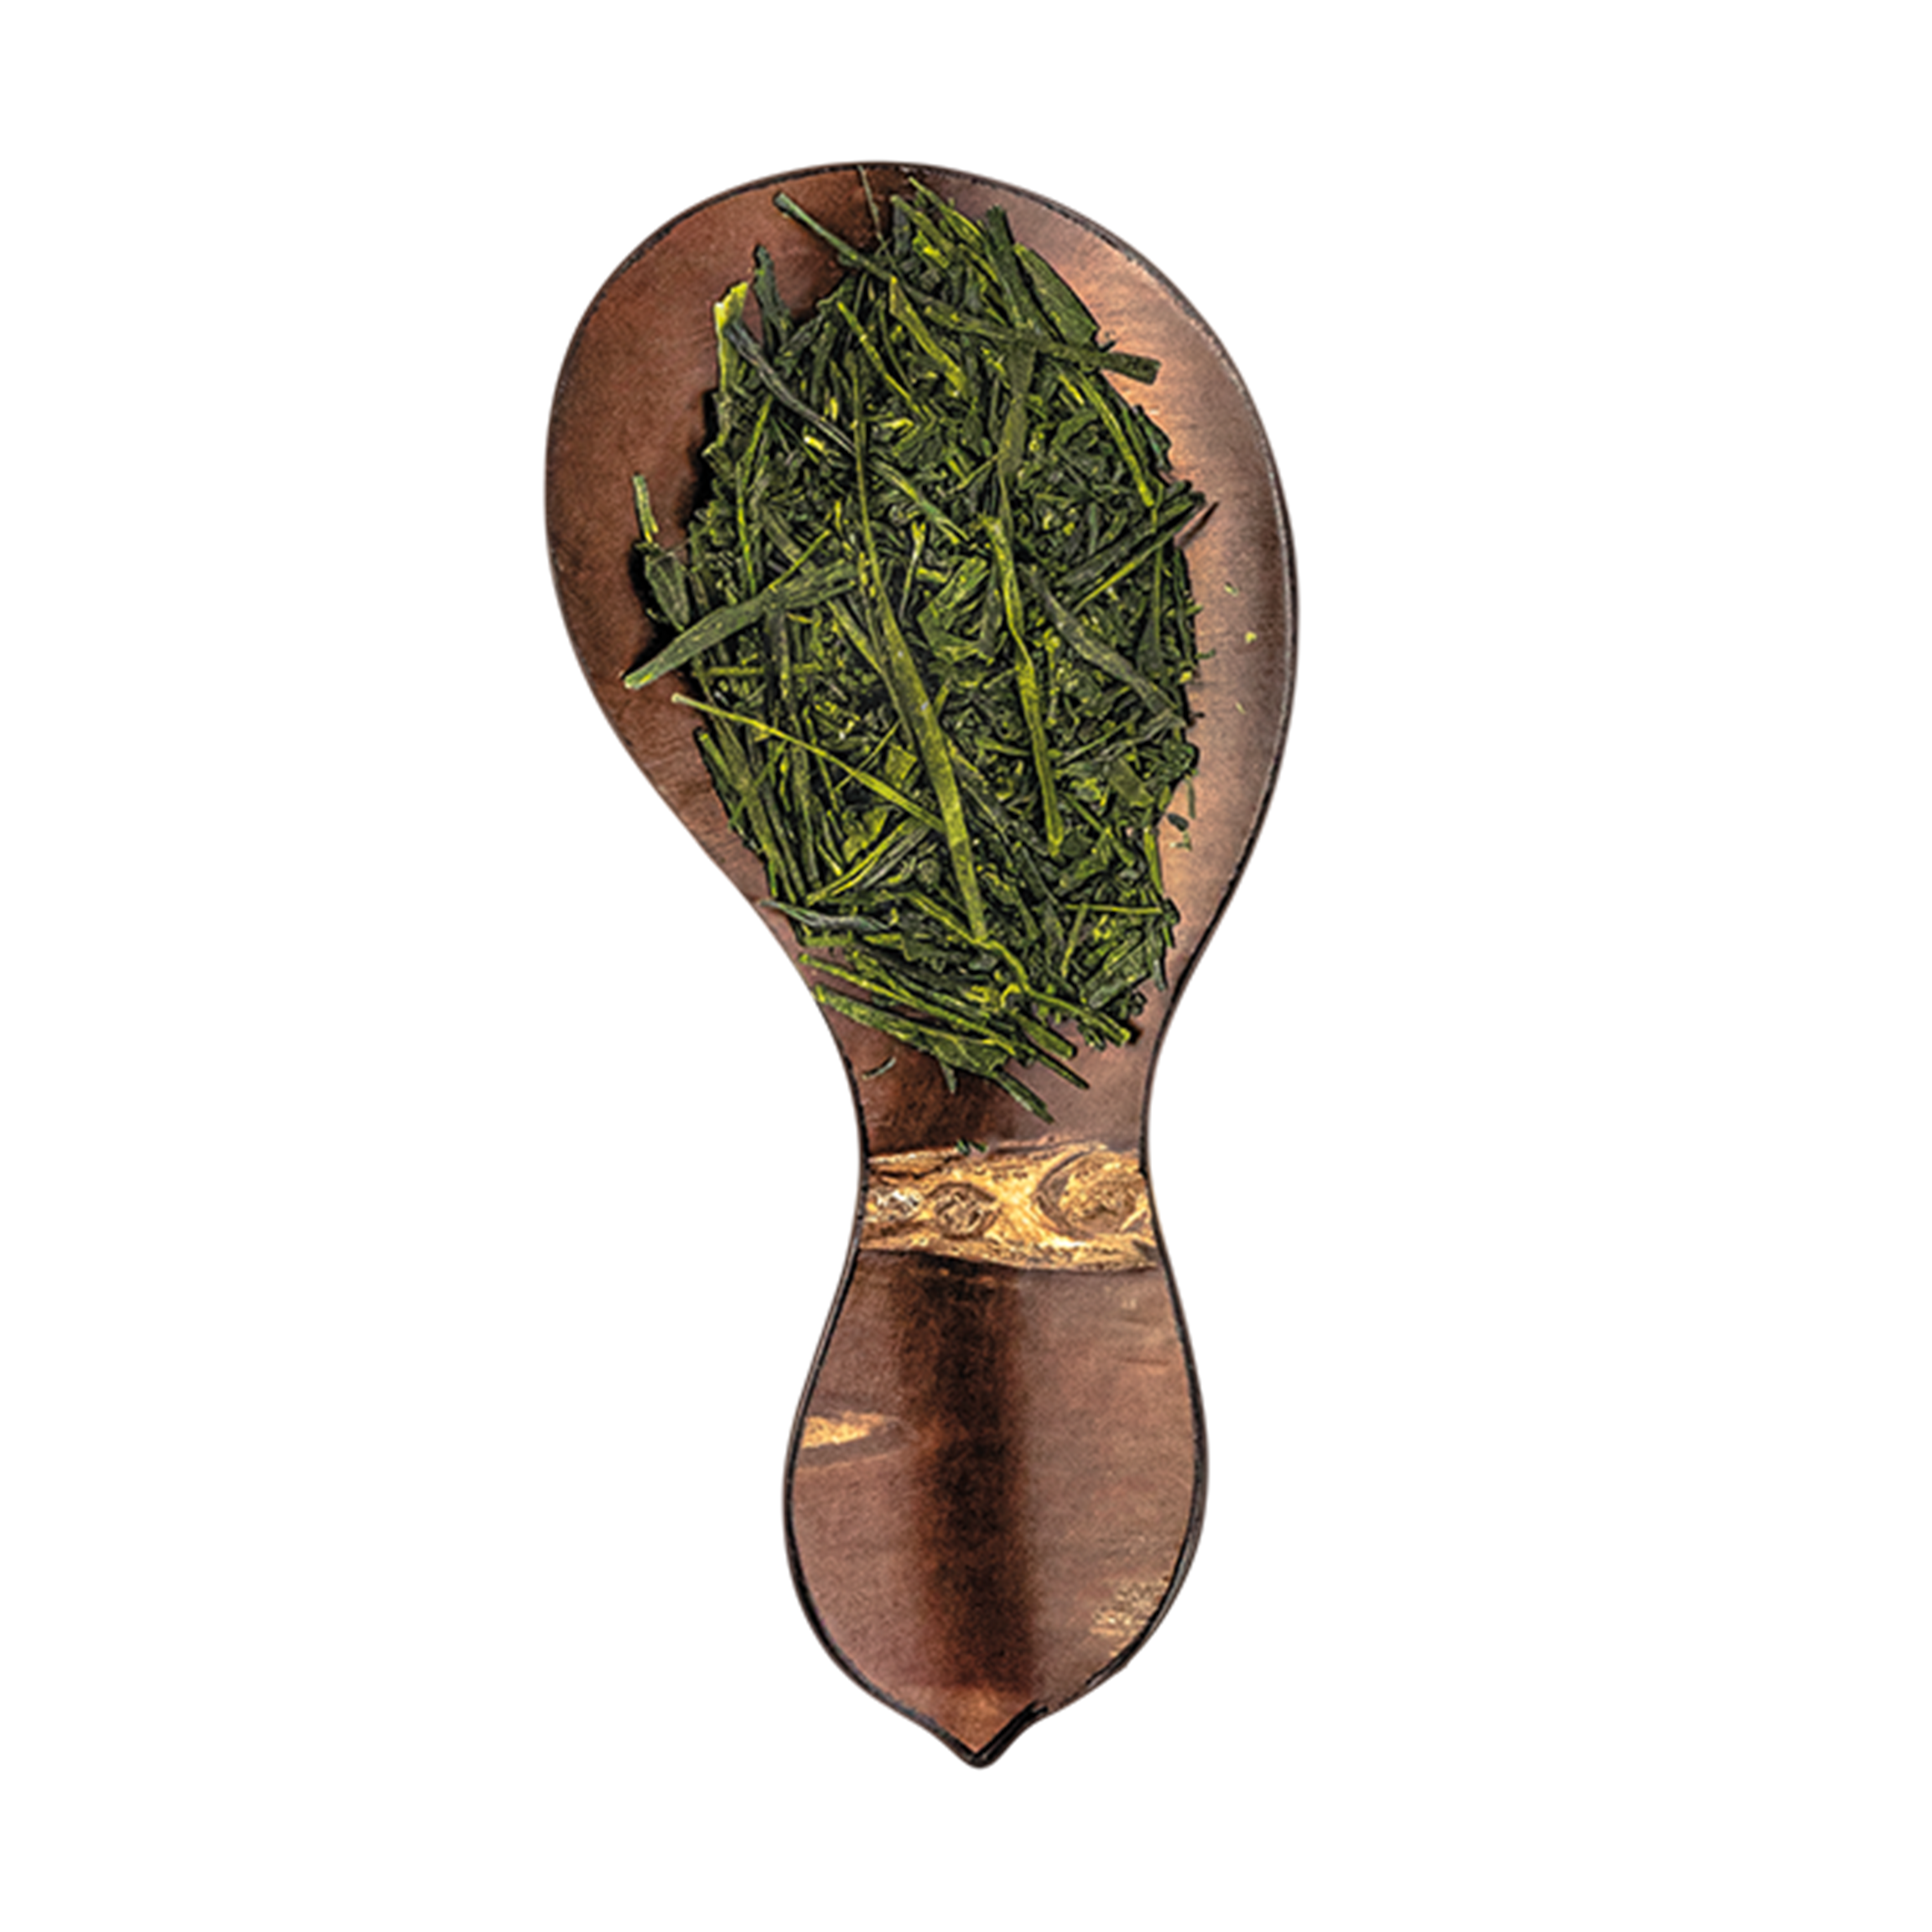 Tenbu Fuka - Organic Japanese Green Tea